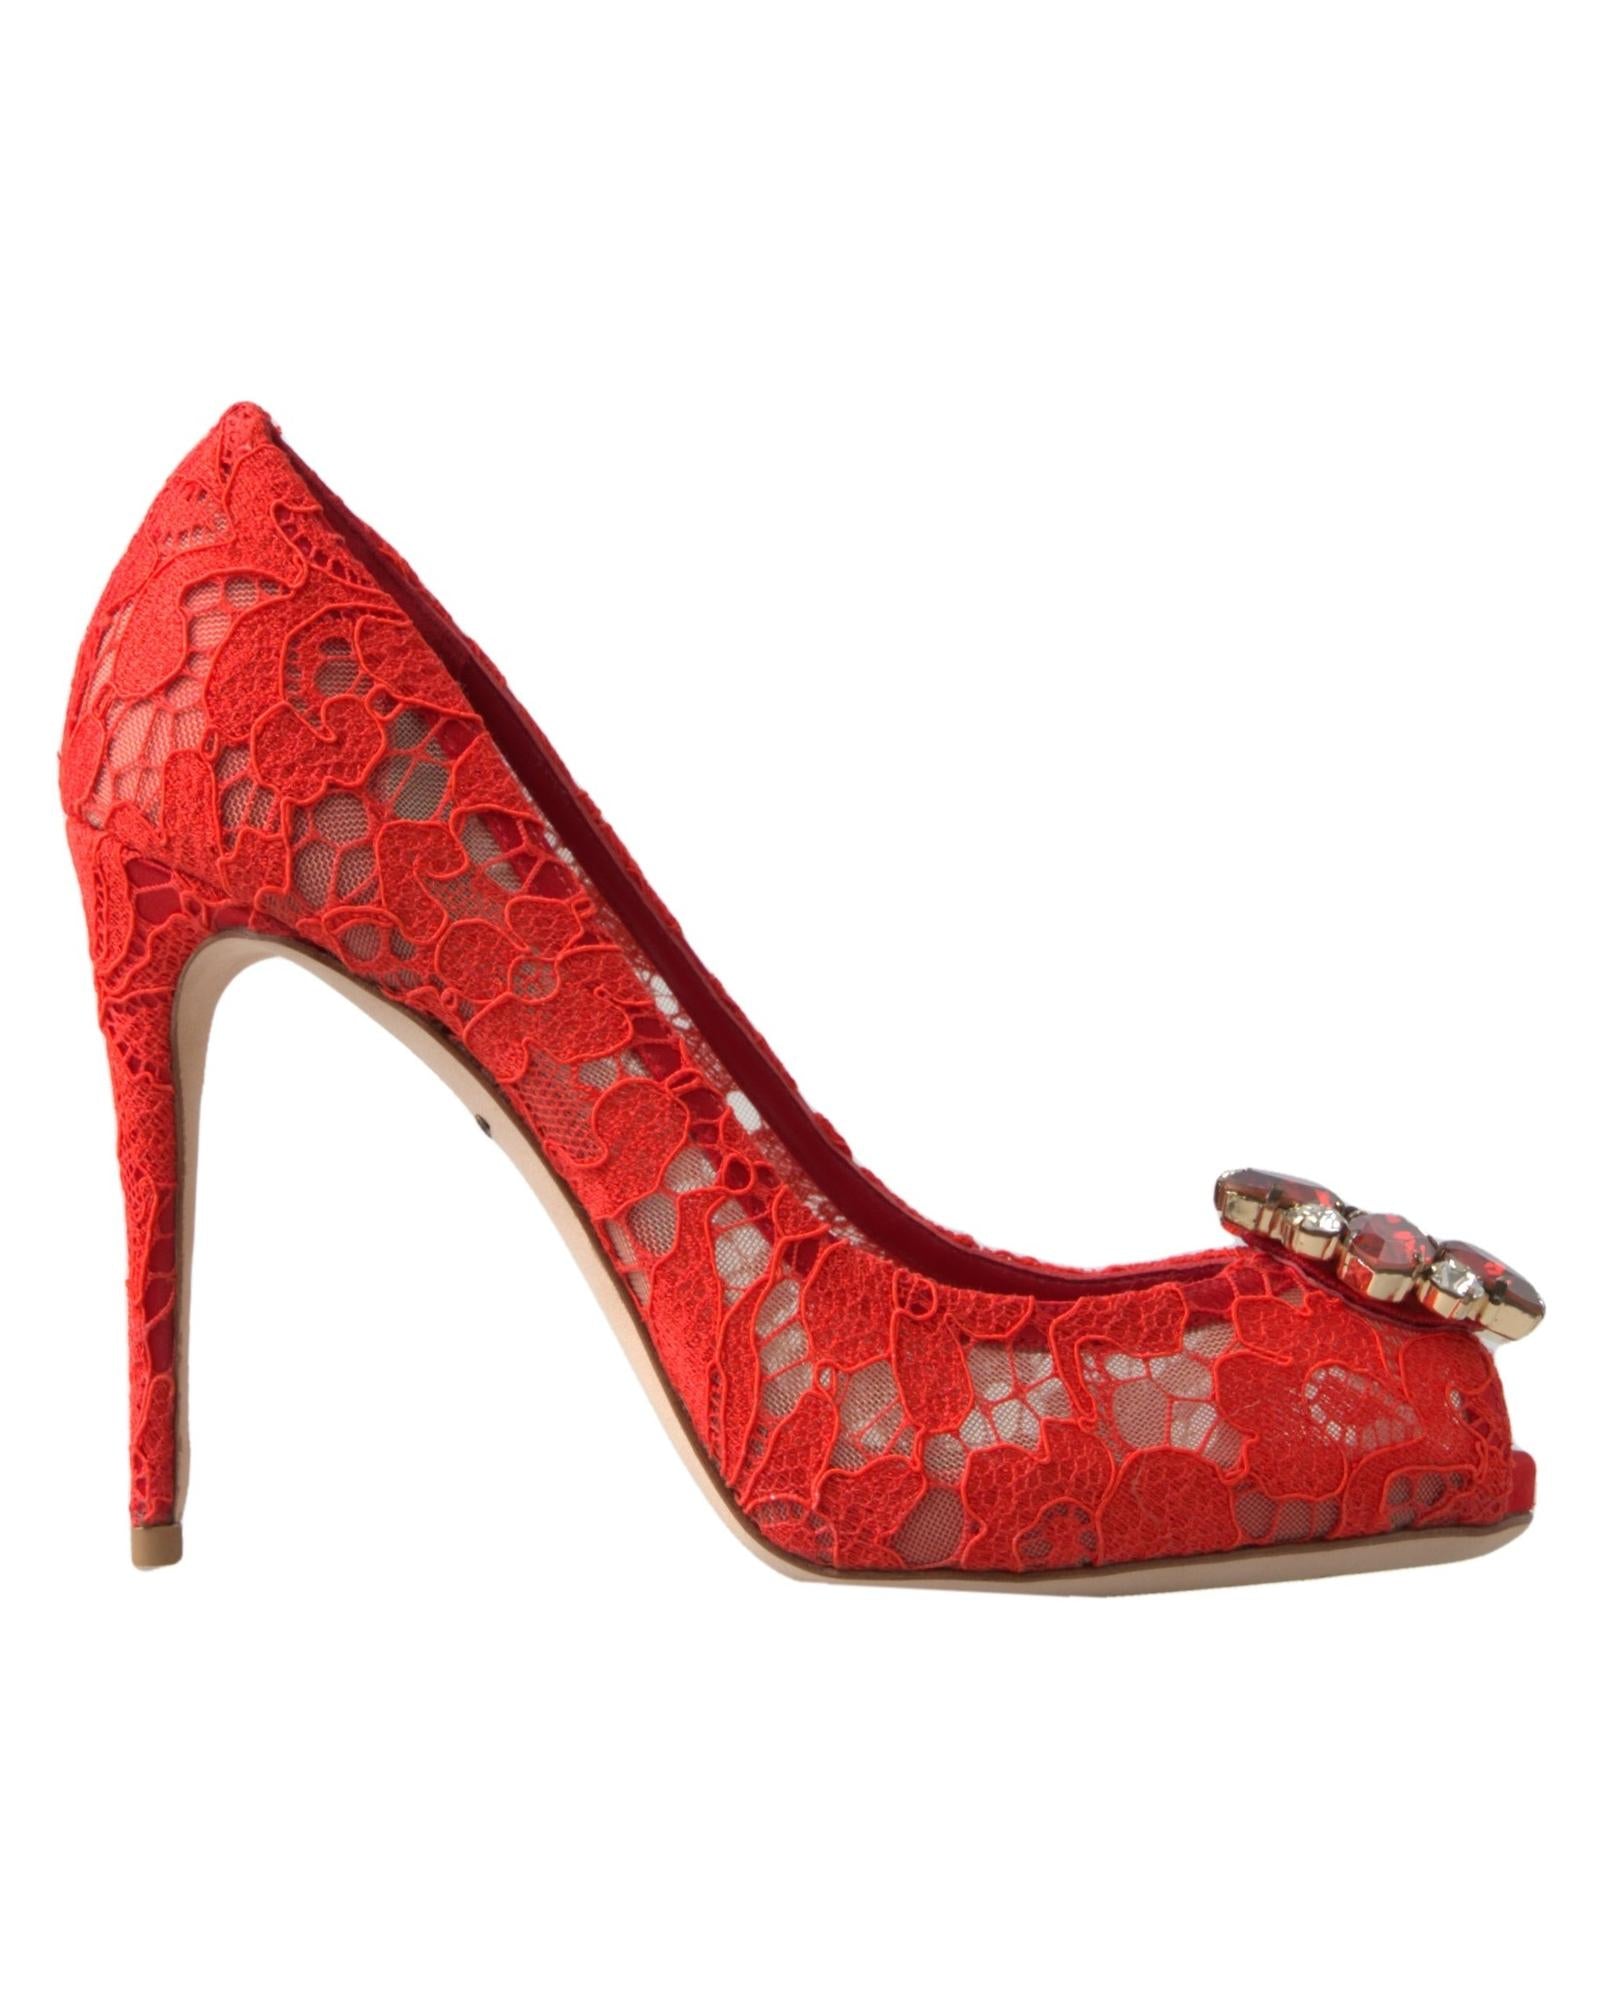 Dolce & Gabbana Women's Red Taormina Lace Crystal Heels Pumps Shoes - 36.5 EU